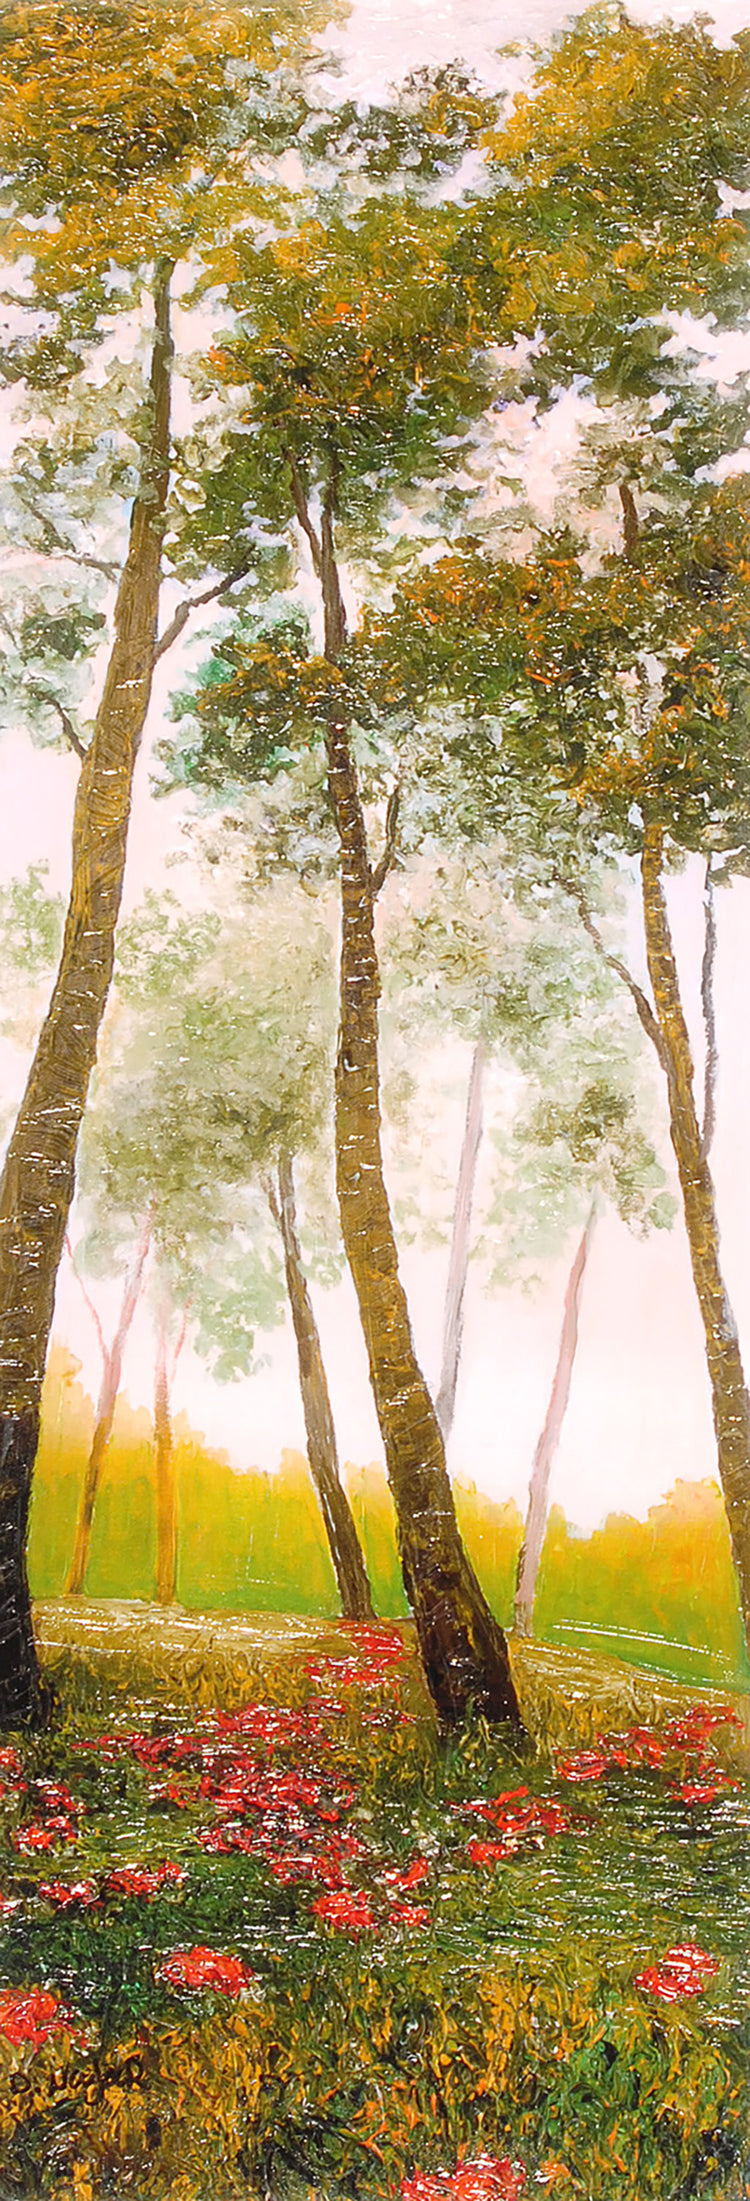 David Najar - Summer Forest (2015)